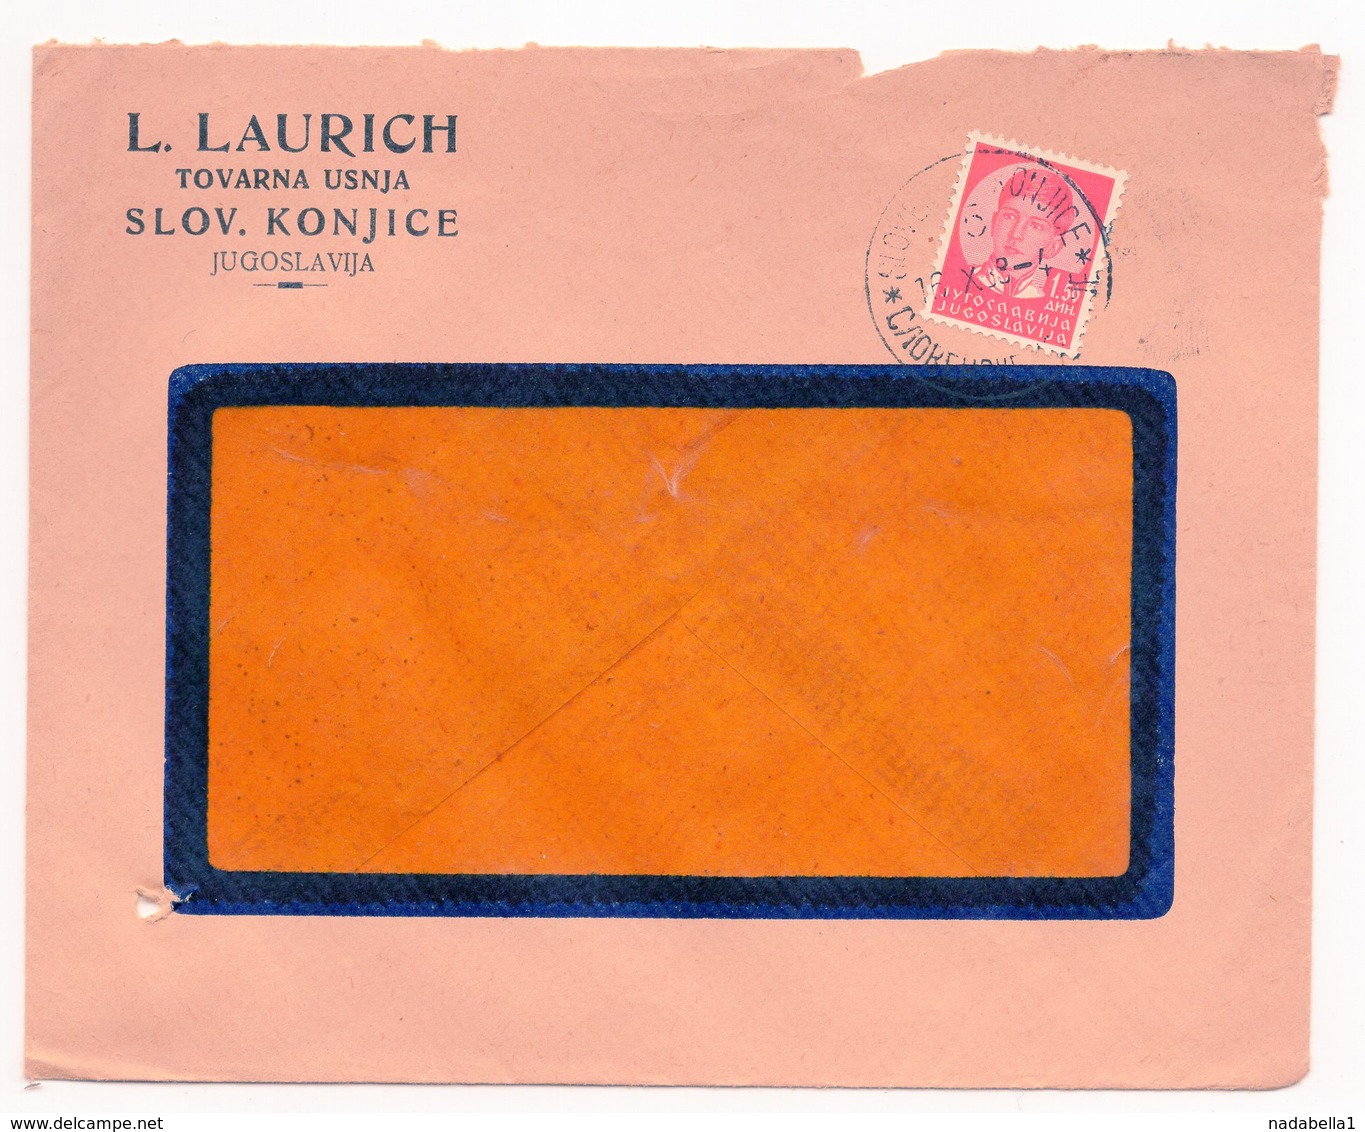 1938 YUGOSLAVIA, SLOVENIA, SLOV. KONJICE, L. LAURICH, COMPANY LETTERHEAD COVER - Covers & Documents